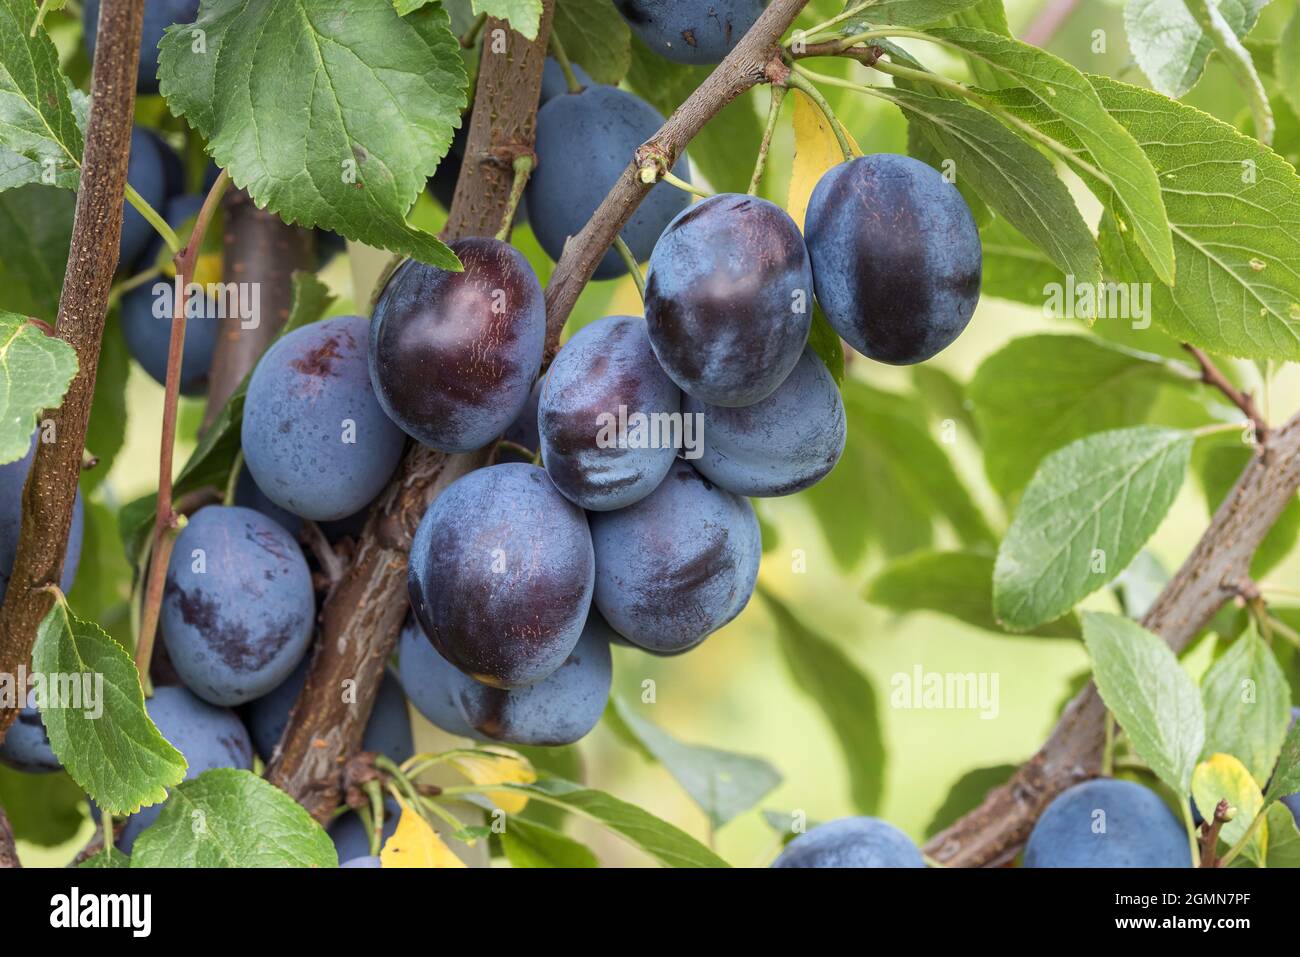 Prunier européenne (Prunus domestica 'Elena', Prunus domestica Elena), prunes sur une branche, cultivar Elena Banque D'Images